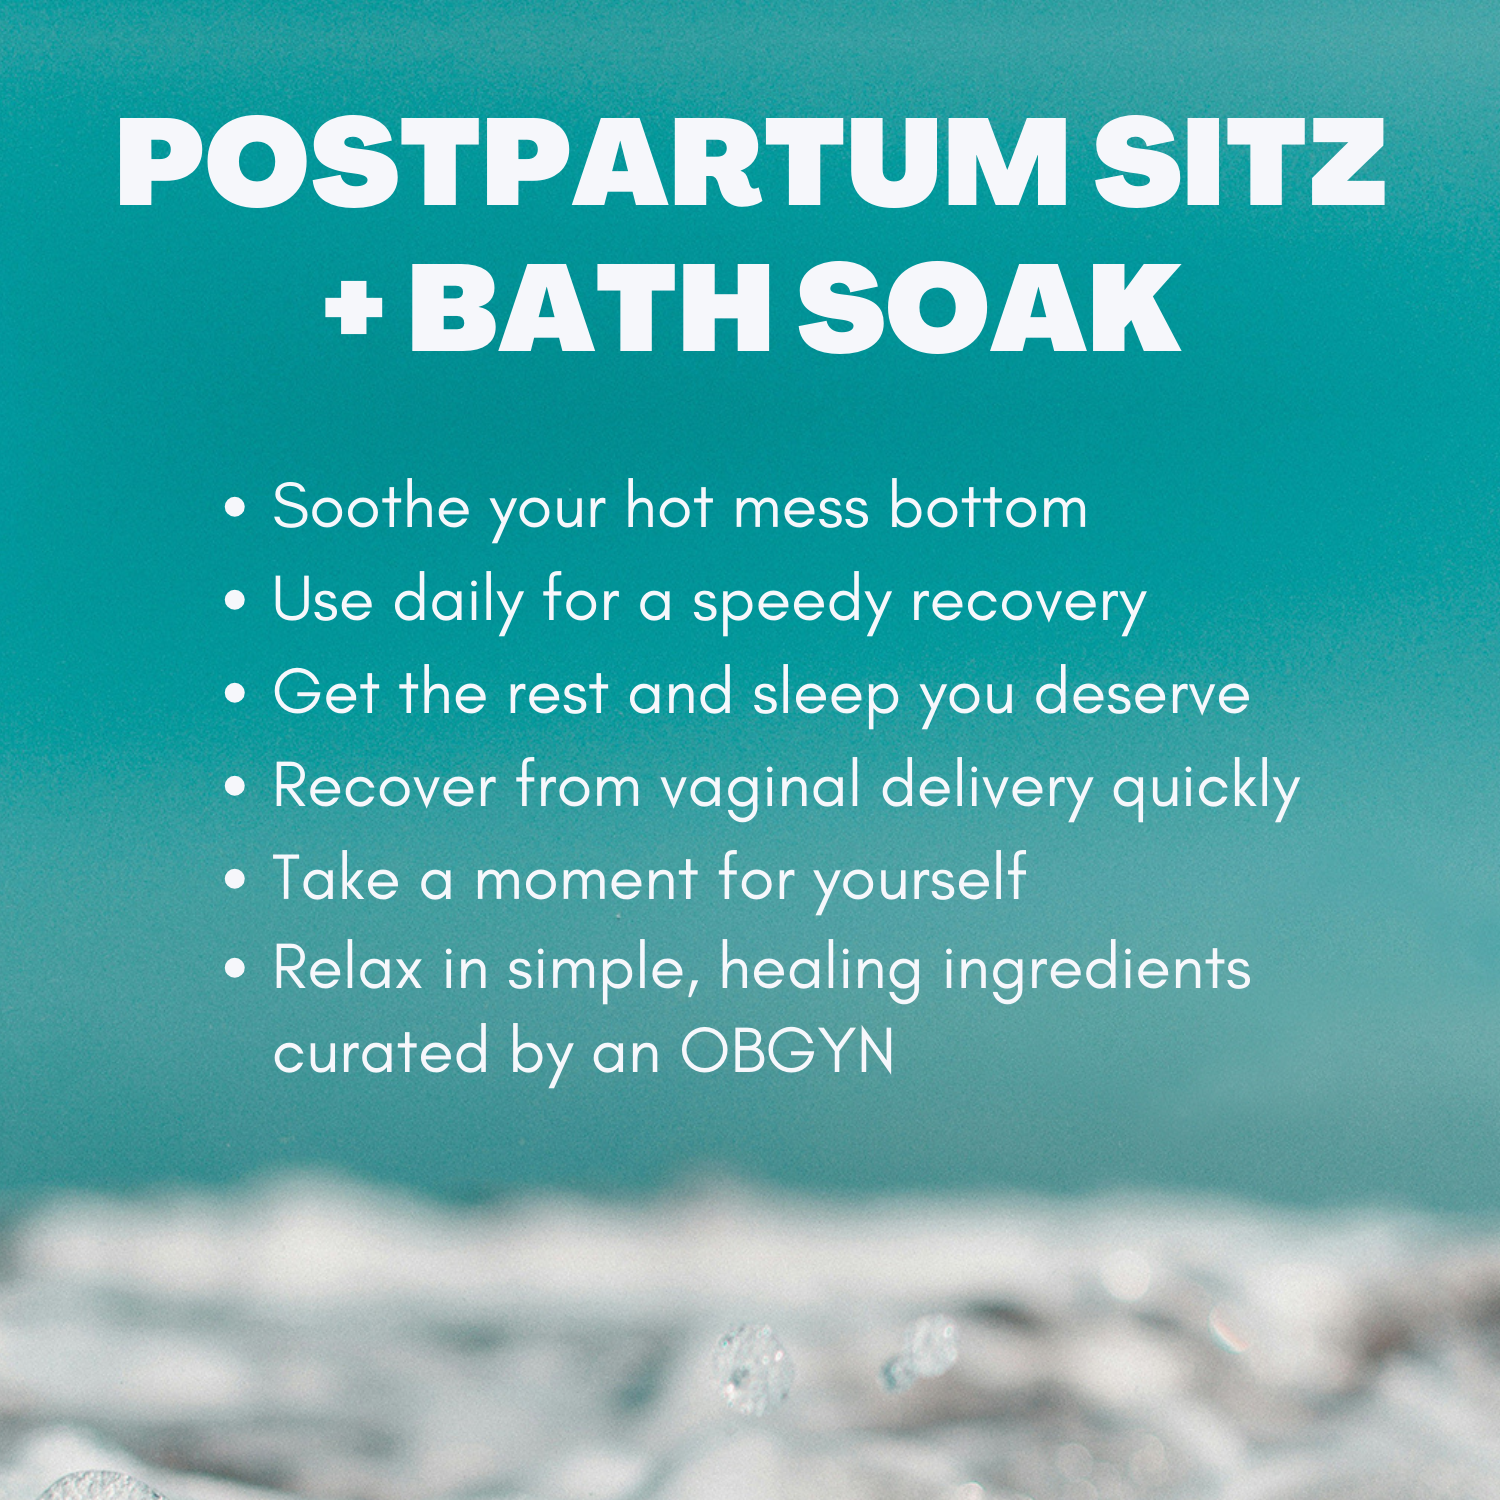 Postpartum sitz bath soak for vaginal delivery